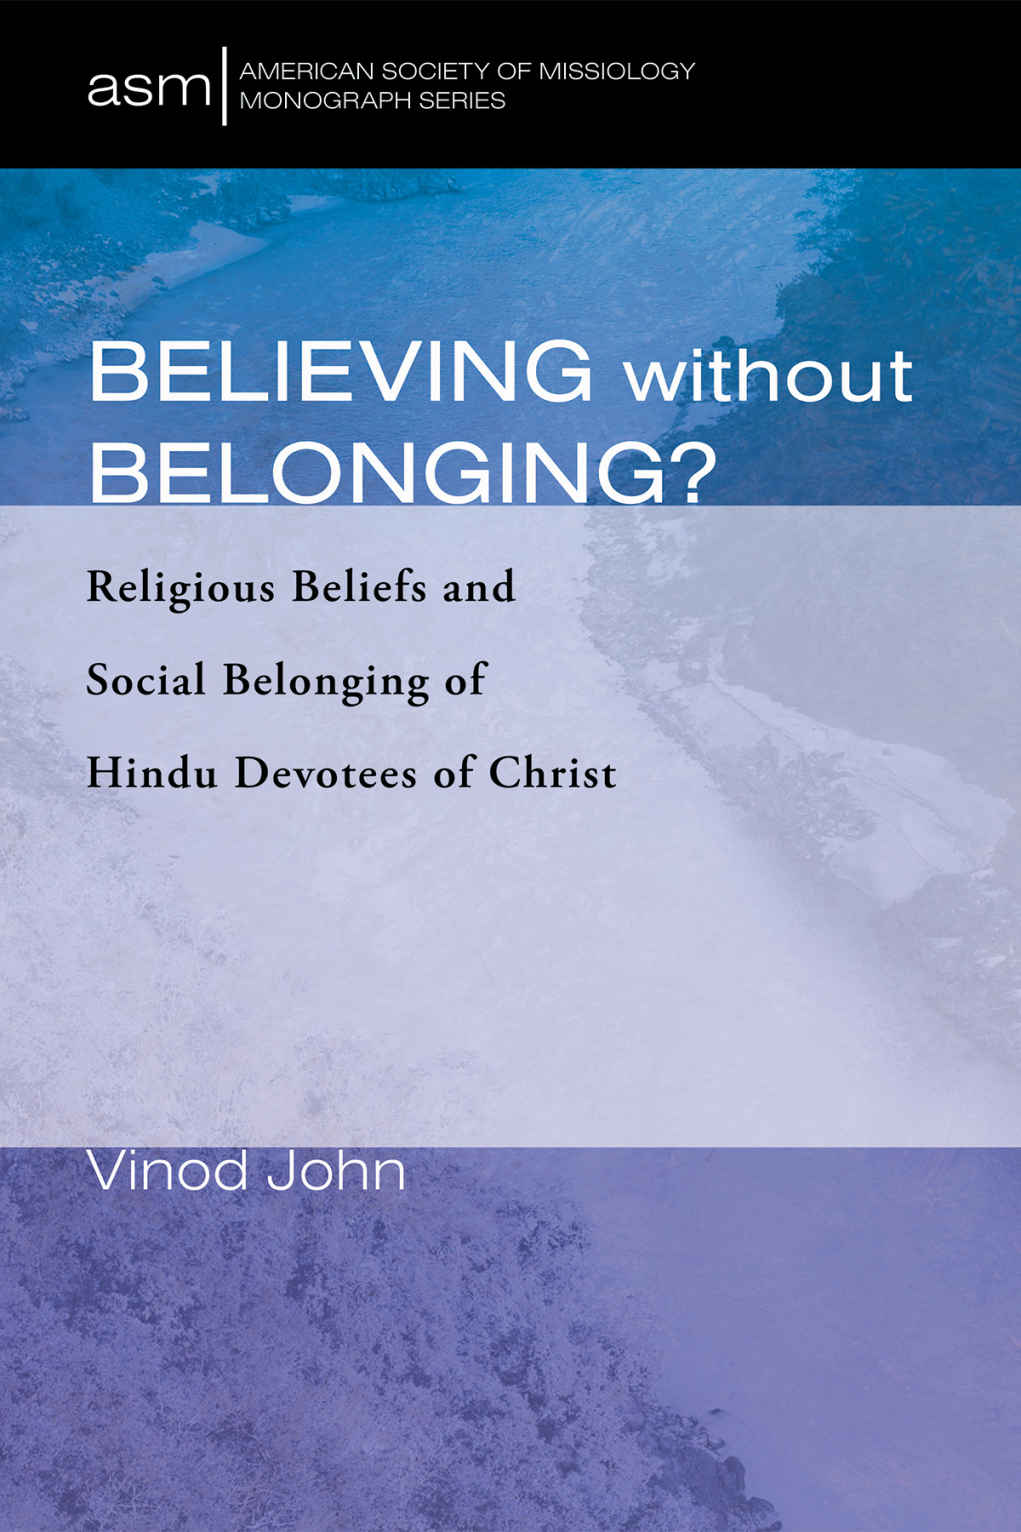 Religious Indignity among Hindu-Background Believers